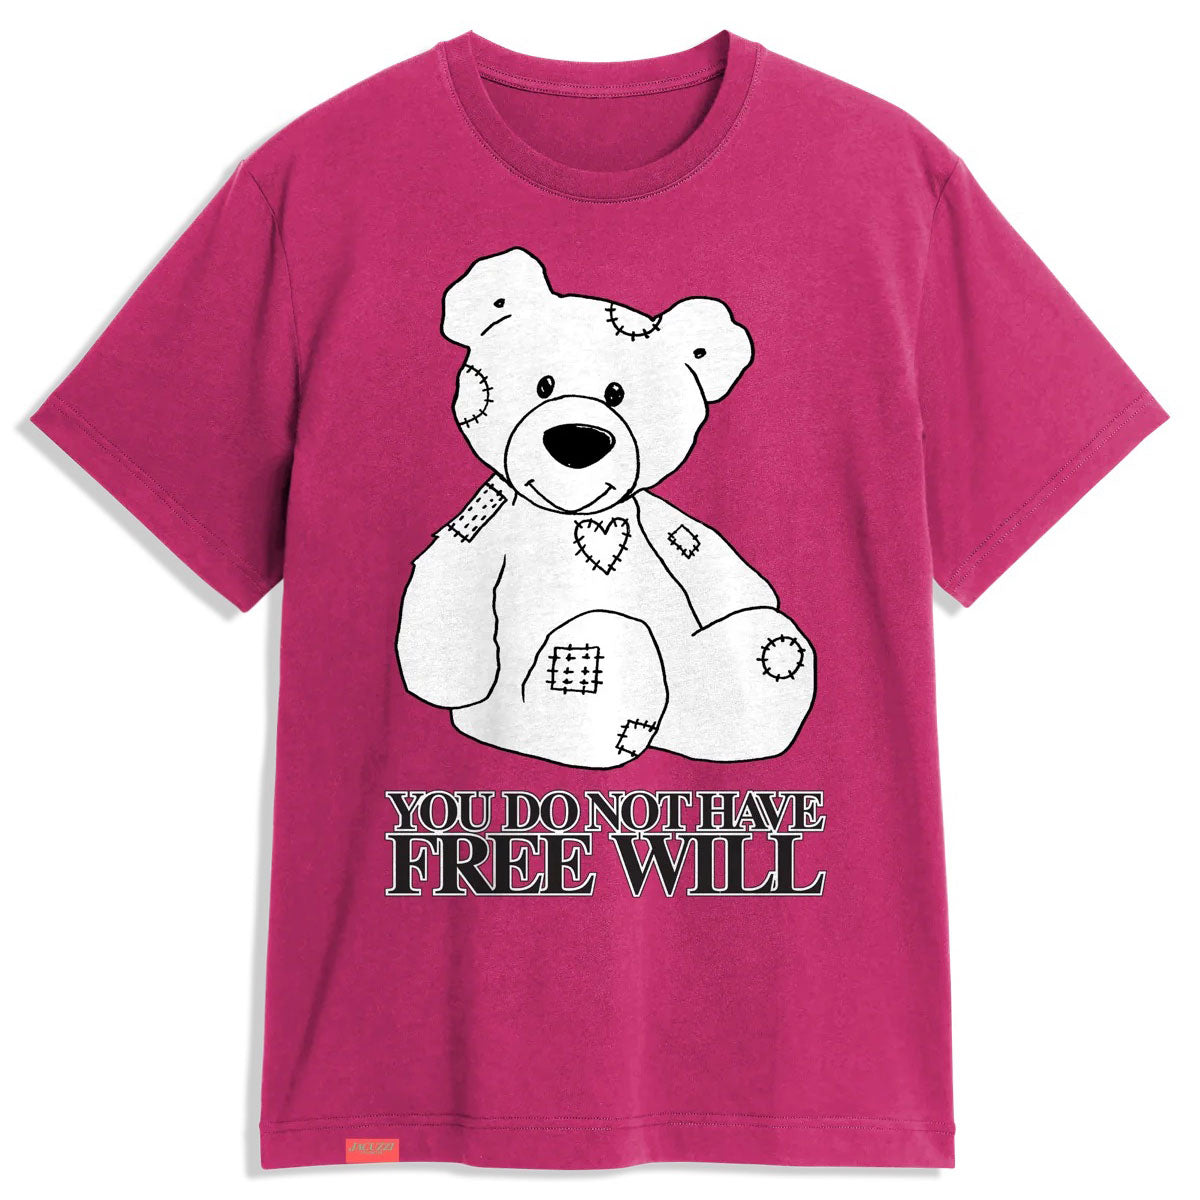 Jacuzzi Free Will Premium T-Shirt - Berry image 1